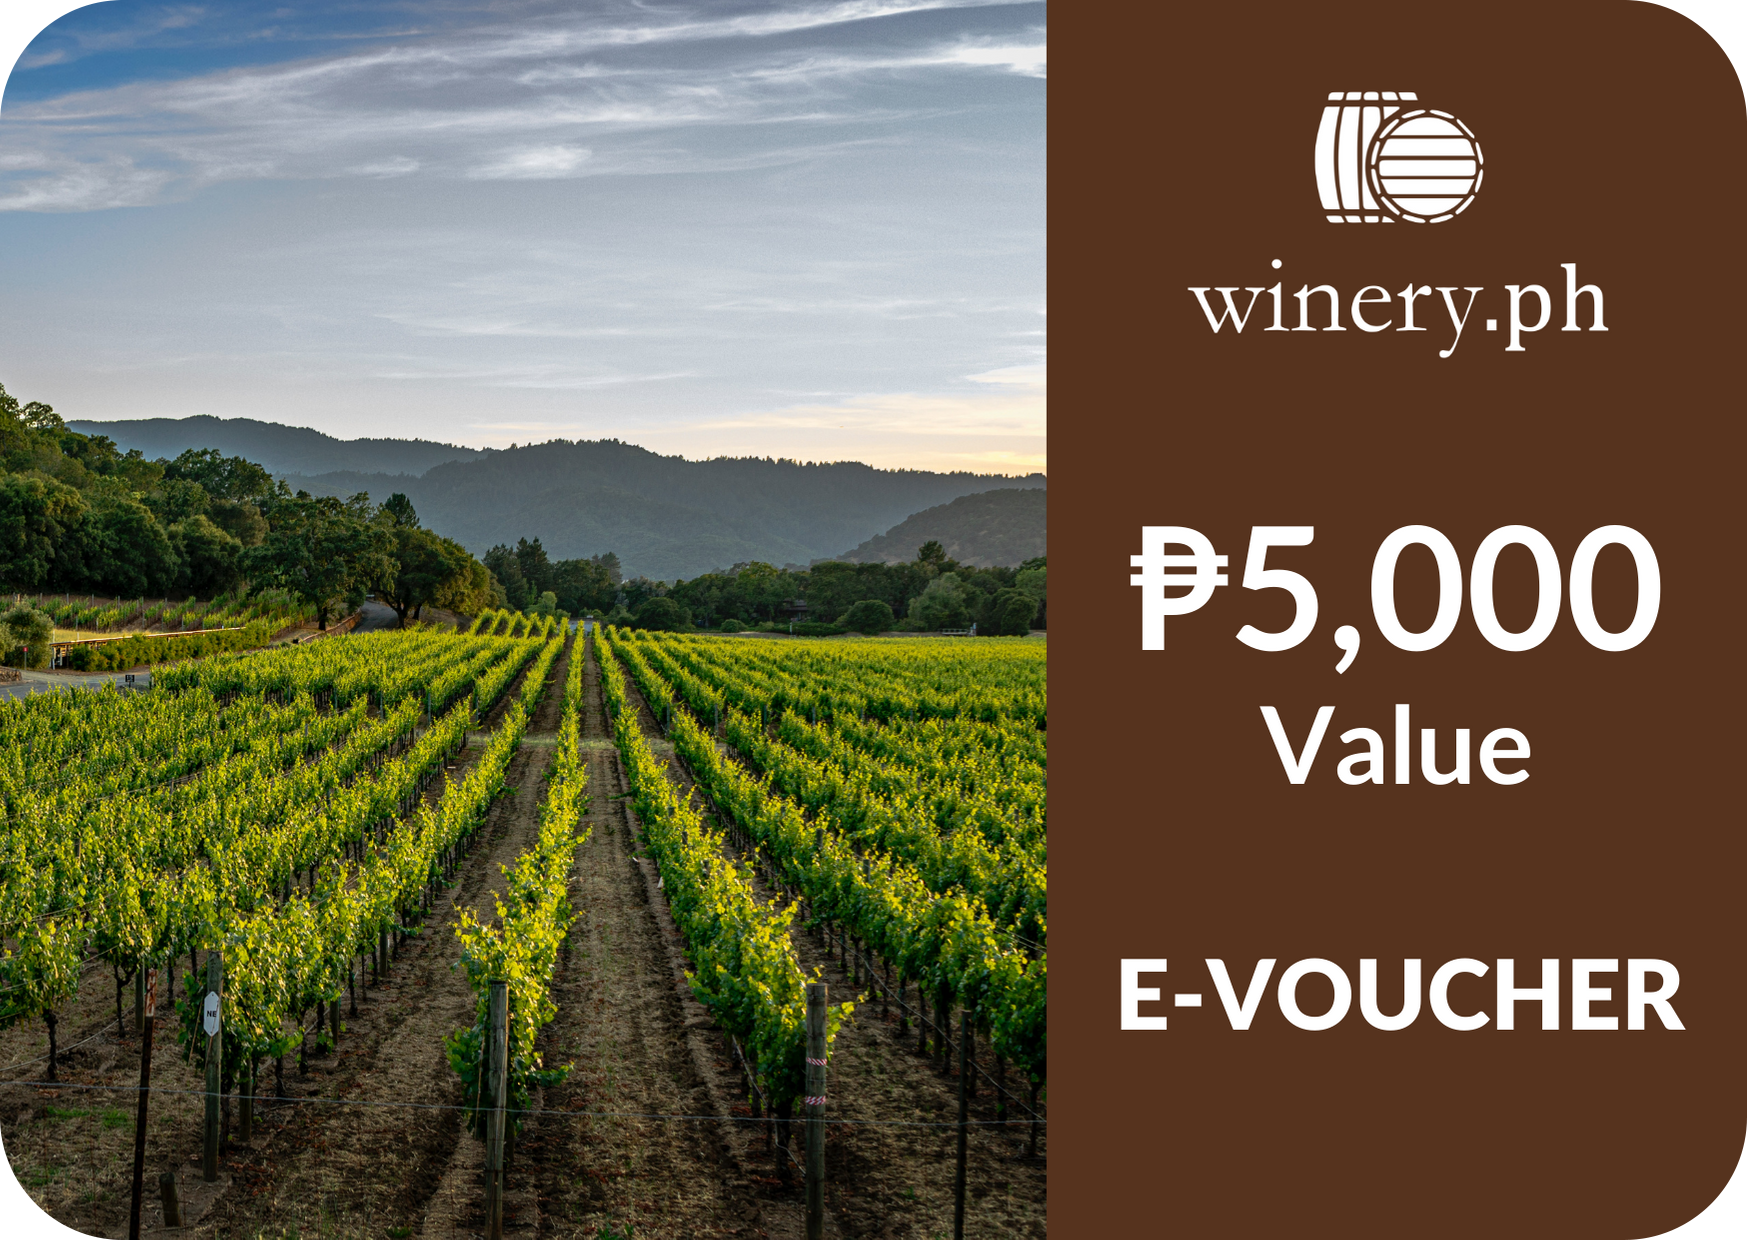 Five Thousand Peso (Php 5,000) Winery.ph e-Voucher